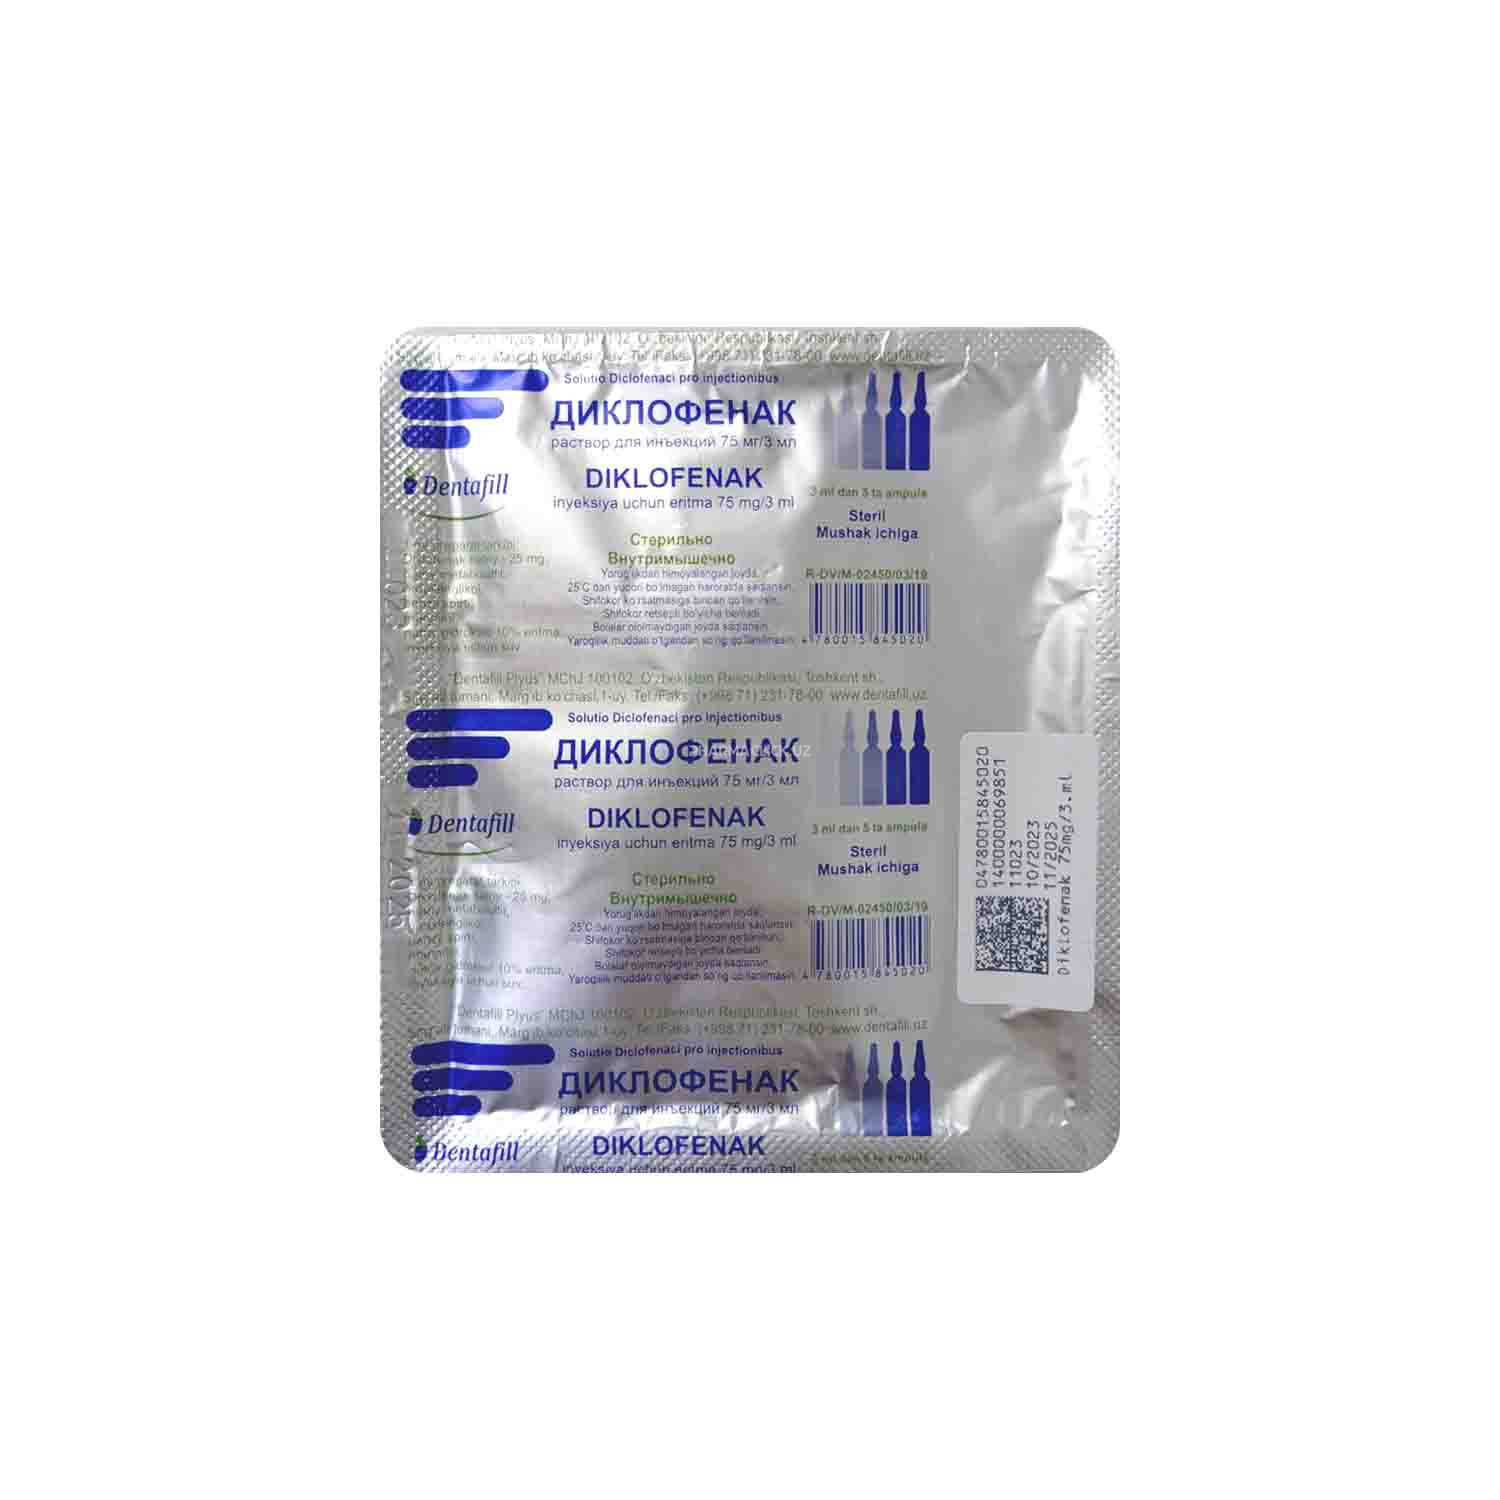 Диклофенак раствор для инъекций 75 мг/3мл 3мл №5 (Dentafill Plyus)